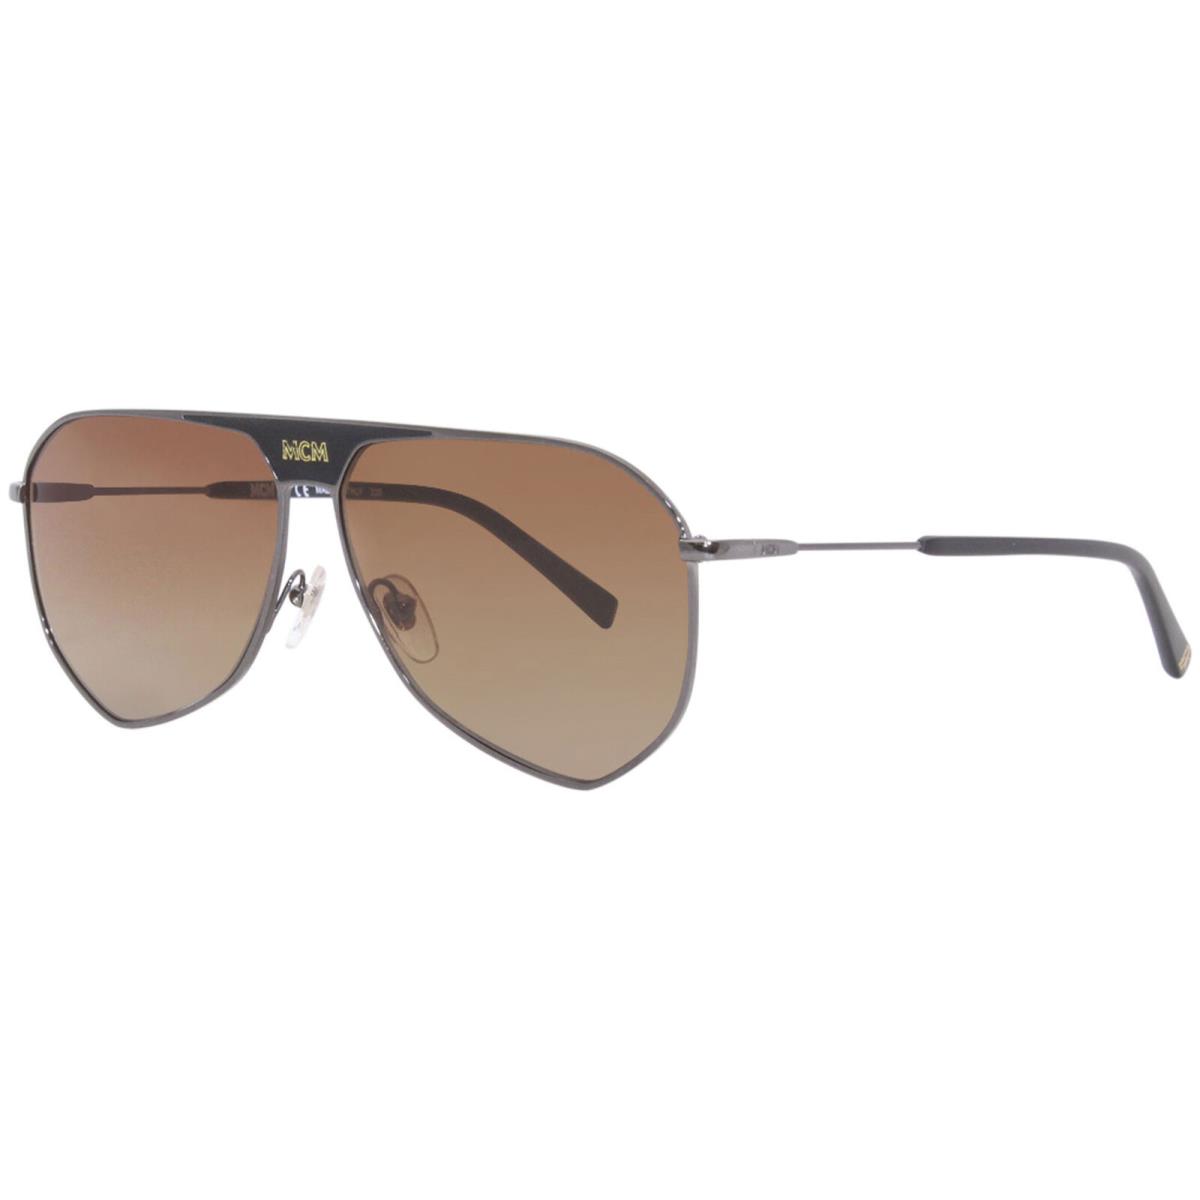 Mcm MCM149SL 069 Sunglasses Men`s Dark Ruthenium/brown Gradient Mirror Lens 61mm